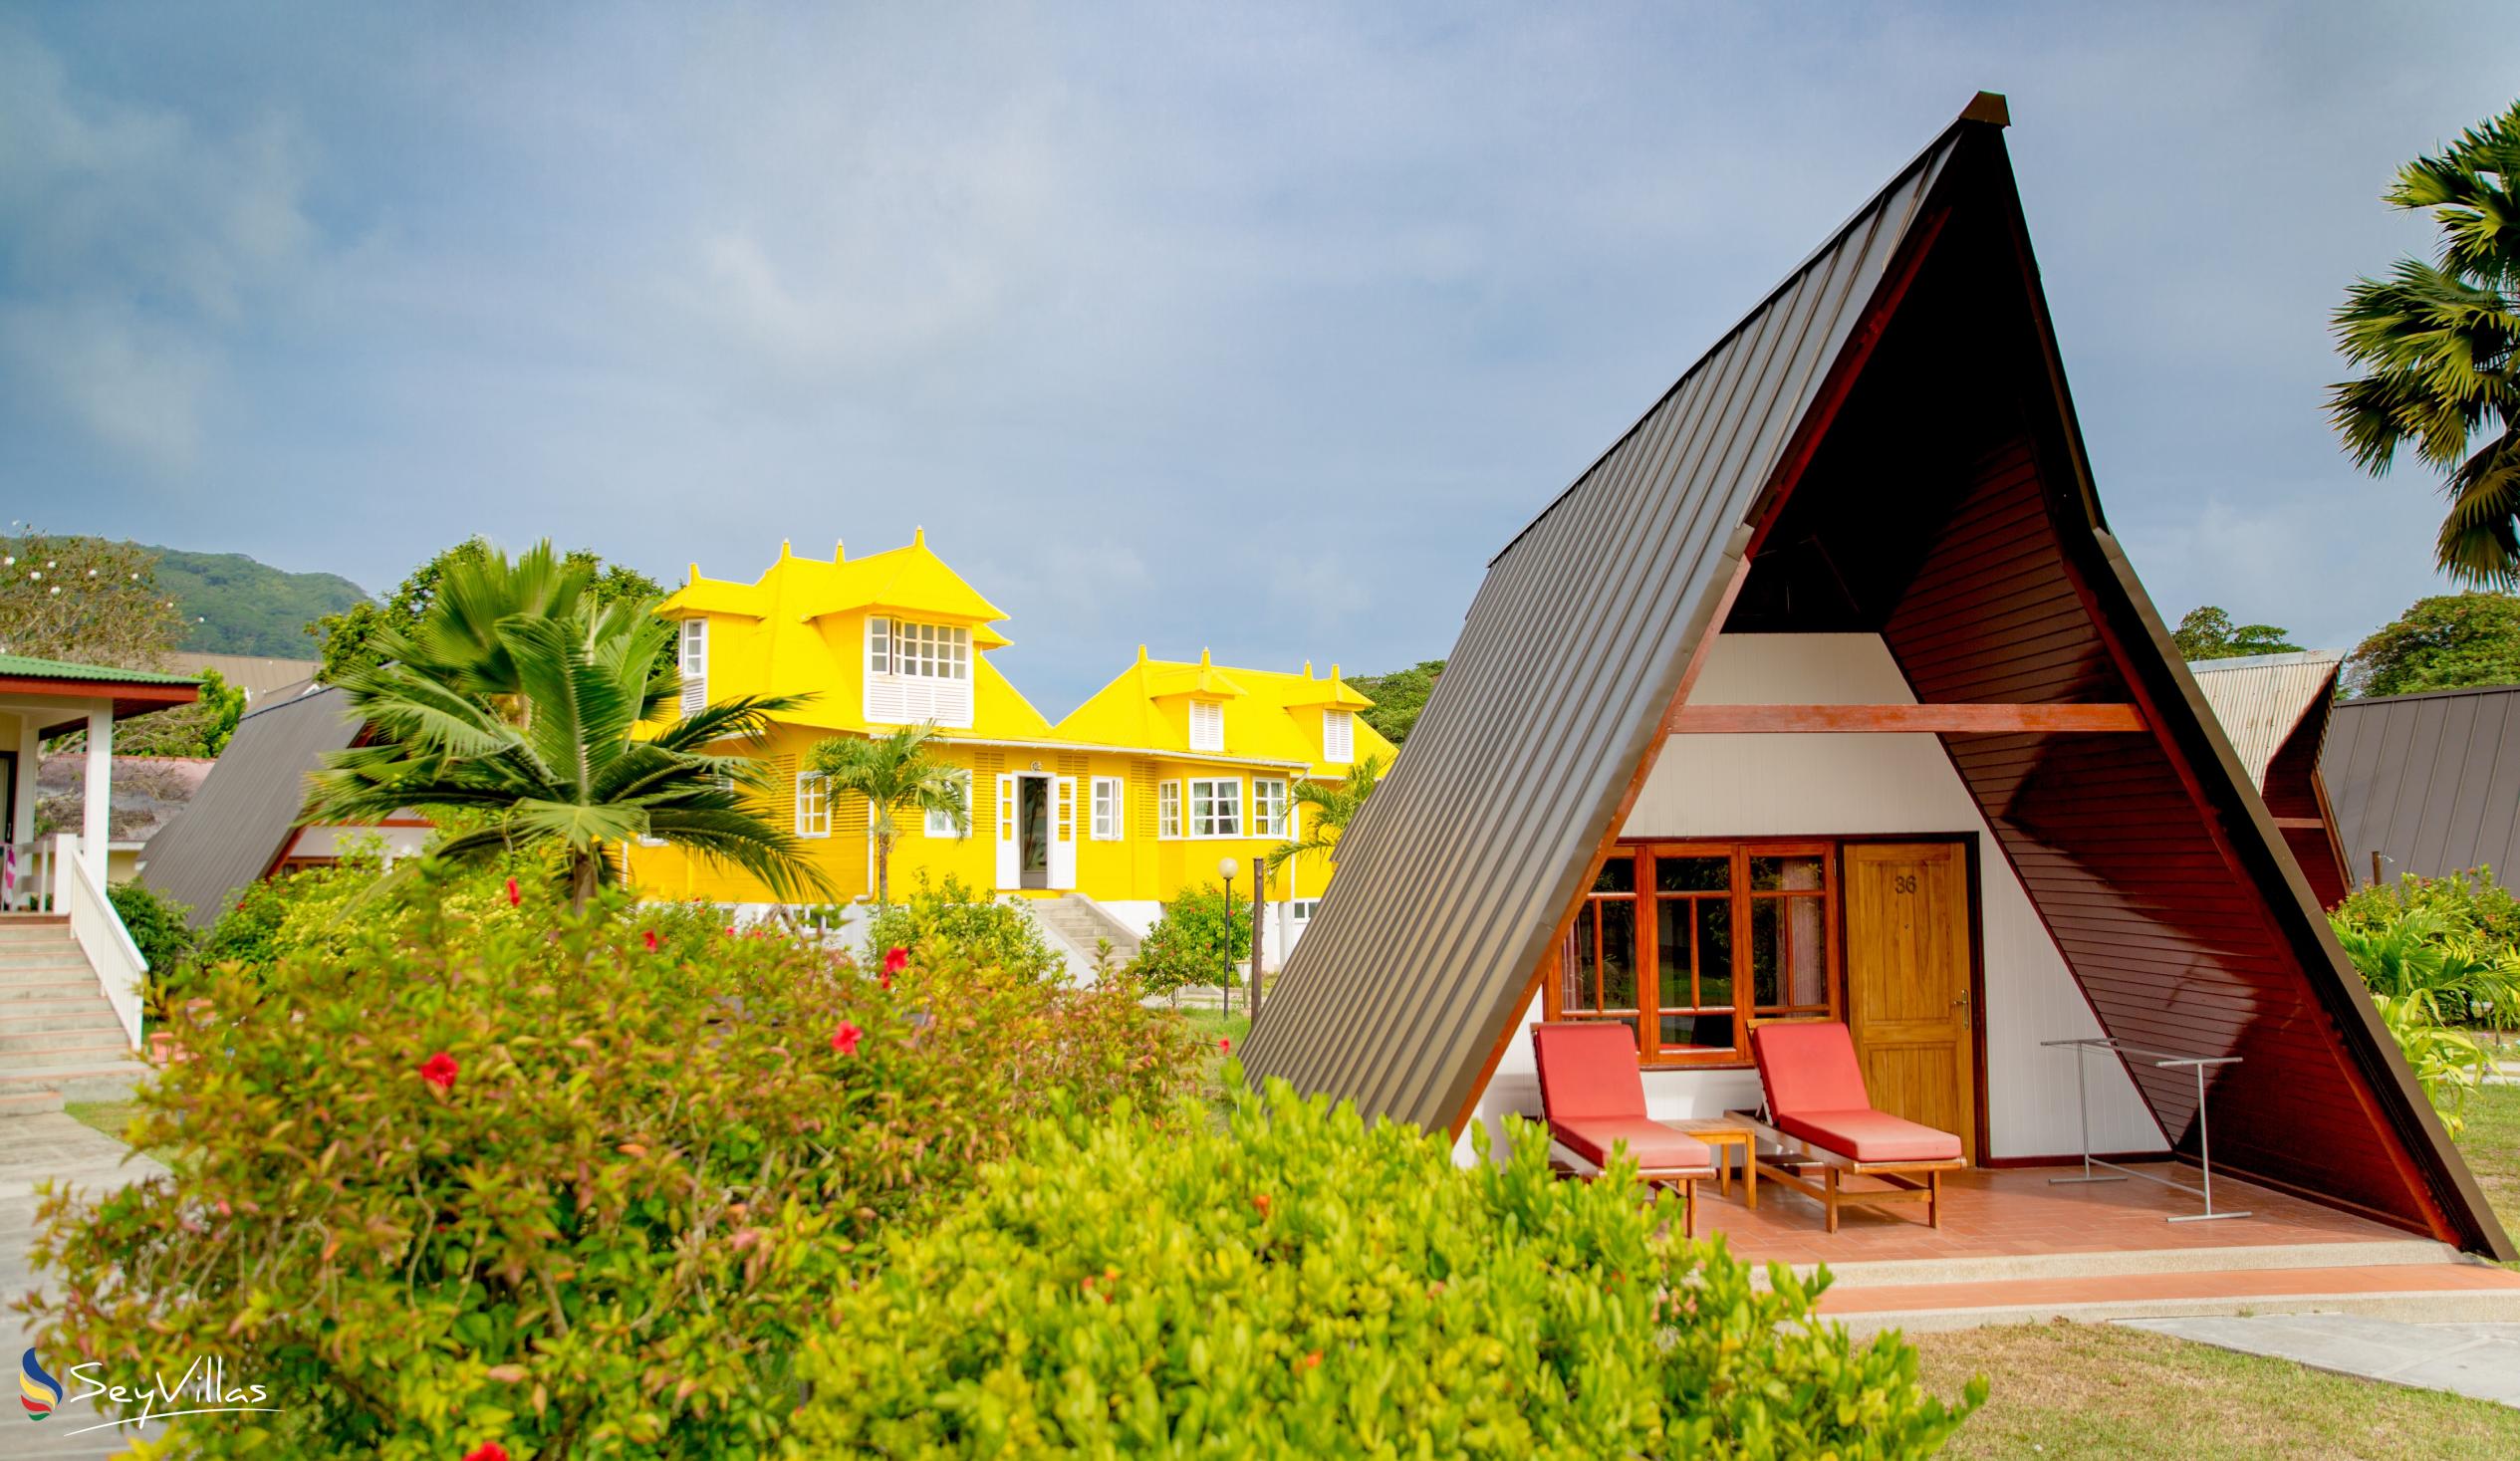 Photo 80: La Digue Island Lodge - La Digue (Seychelles)